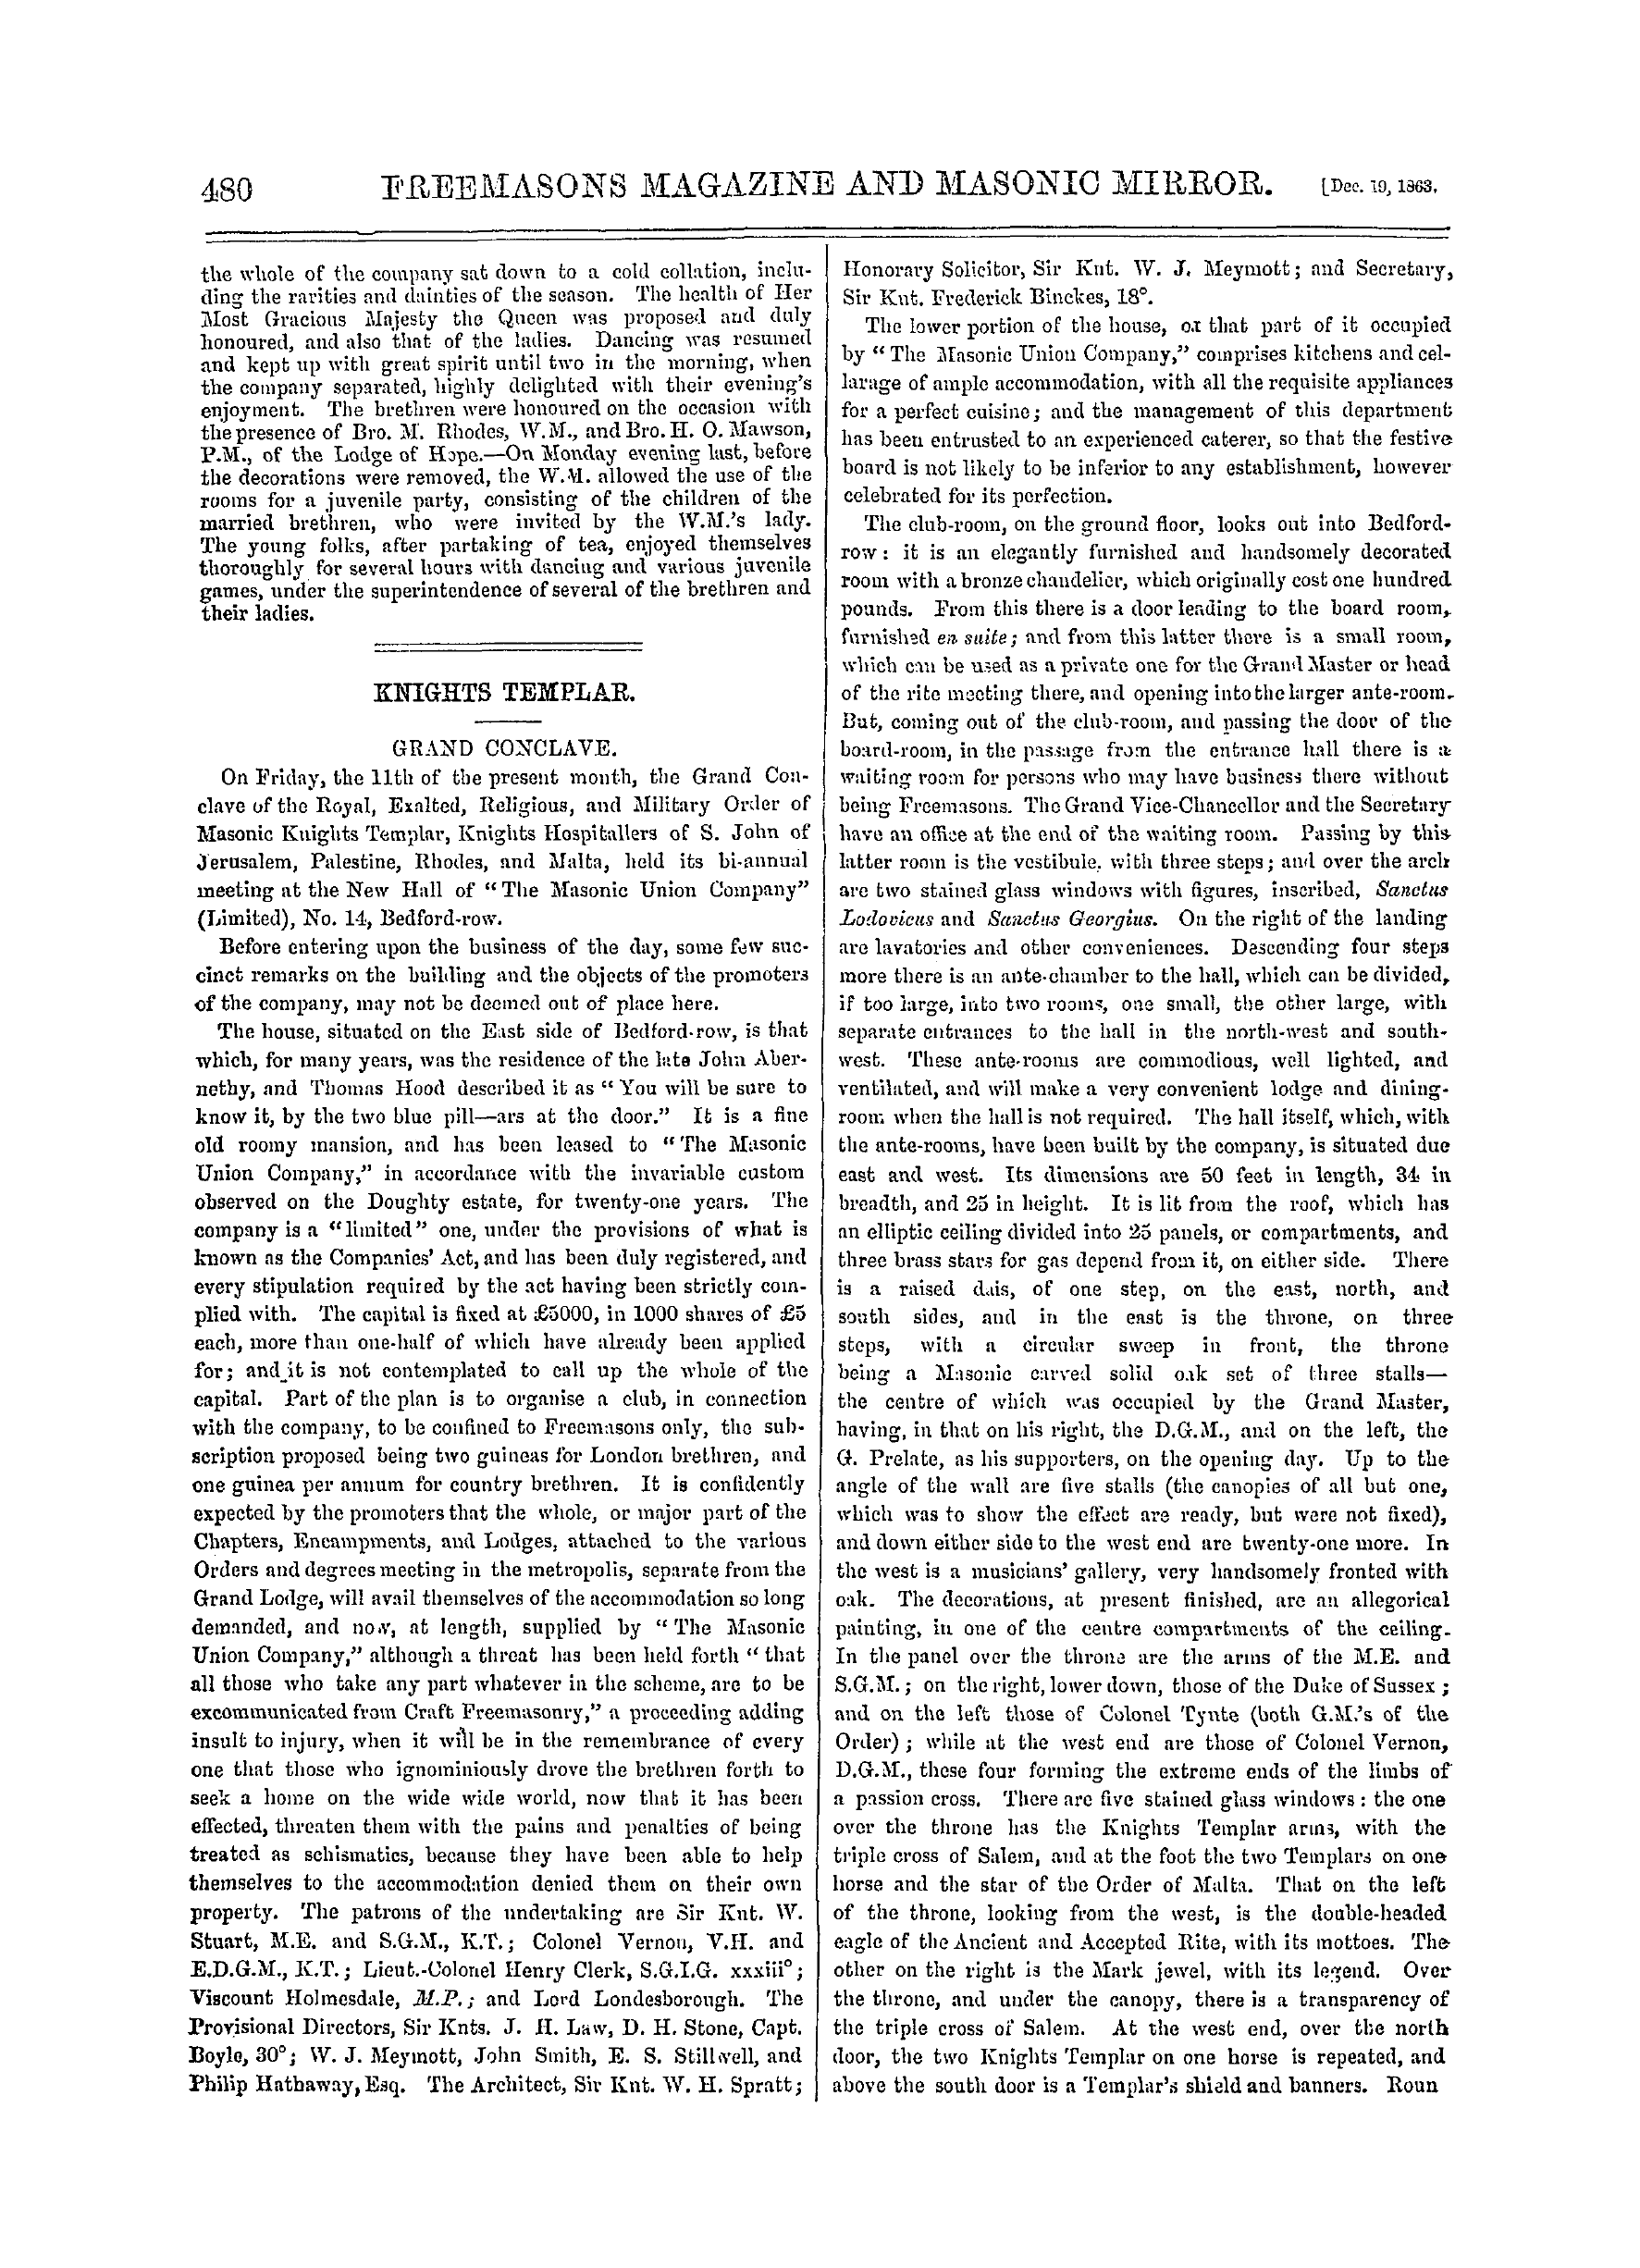 The Freemasons' Monthly Magazine: 1863-12-19 - Knights Templar.